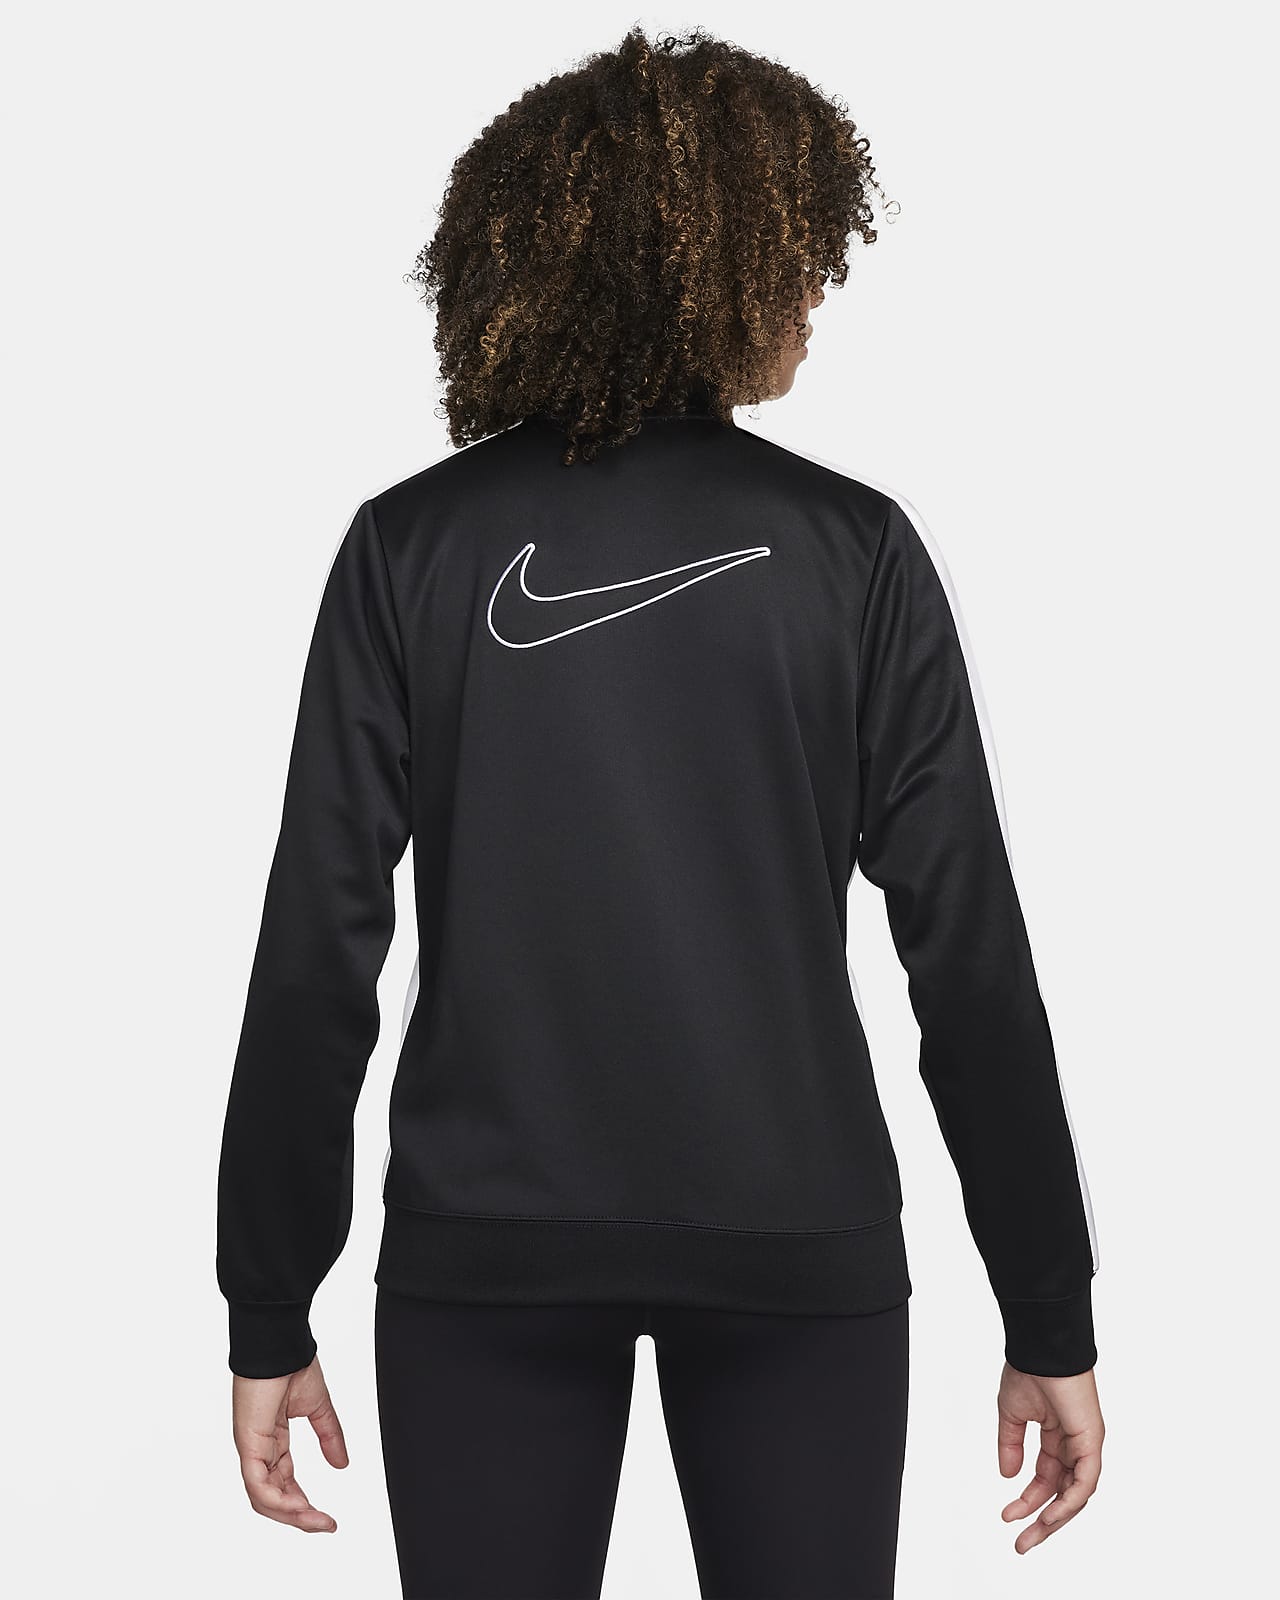 Nike Women's Sportswear Heritage Jacket, Team red/Desert Sand